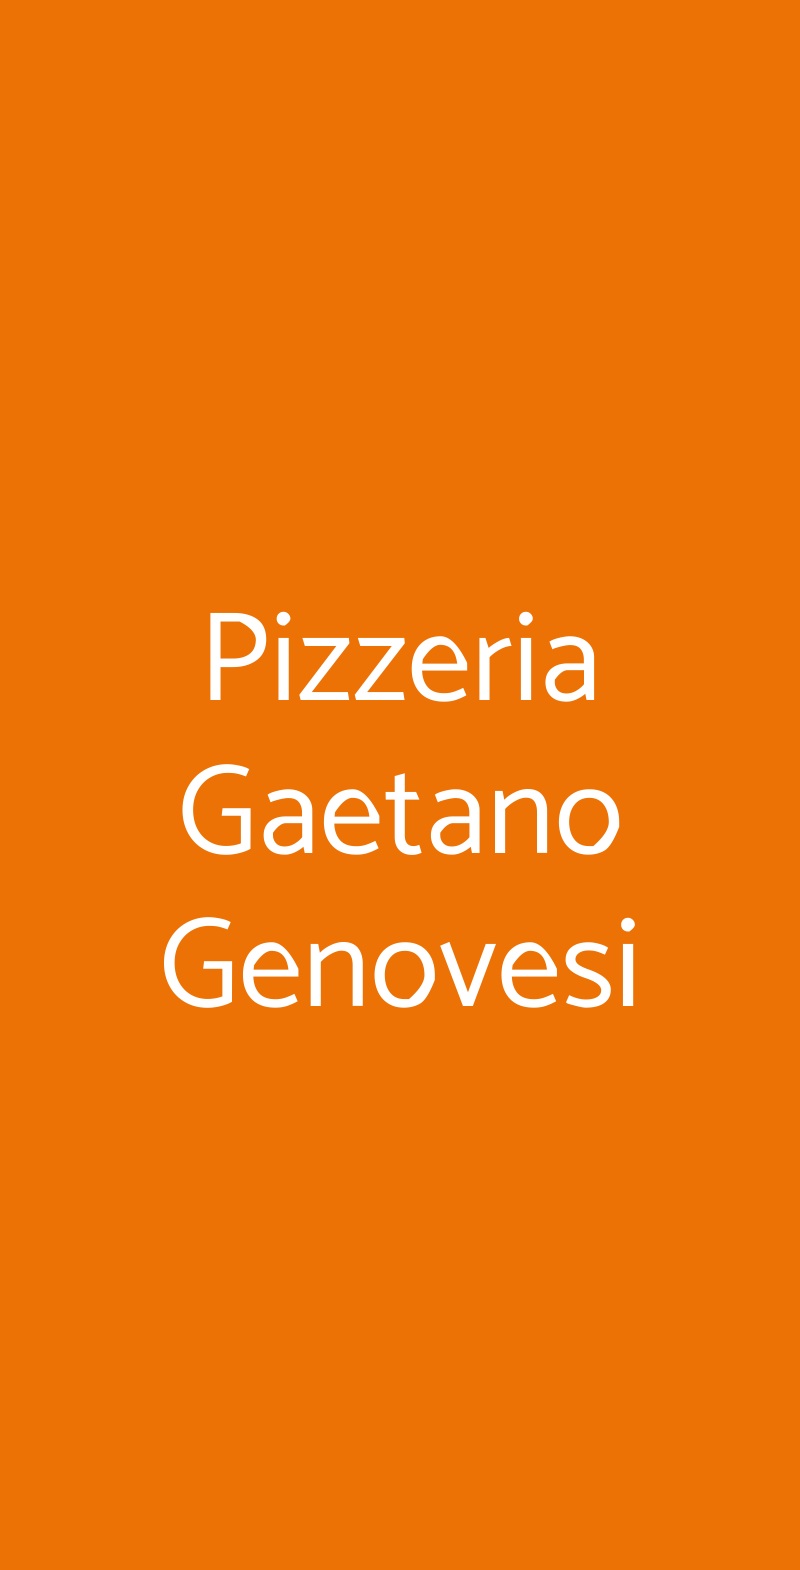 Pizzeria Gaetano Genovesi Napoli menù 1 pagina